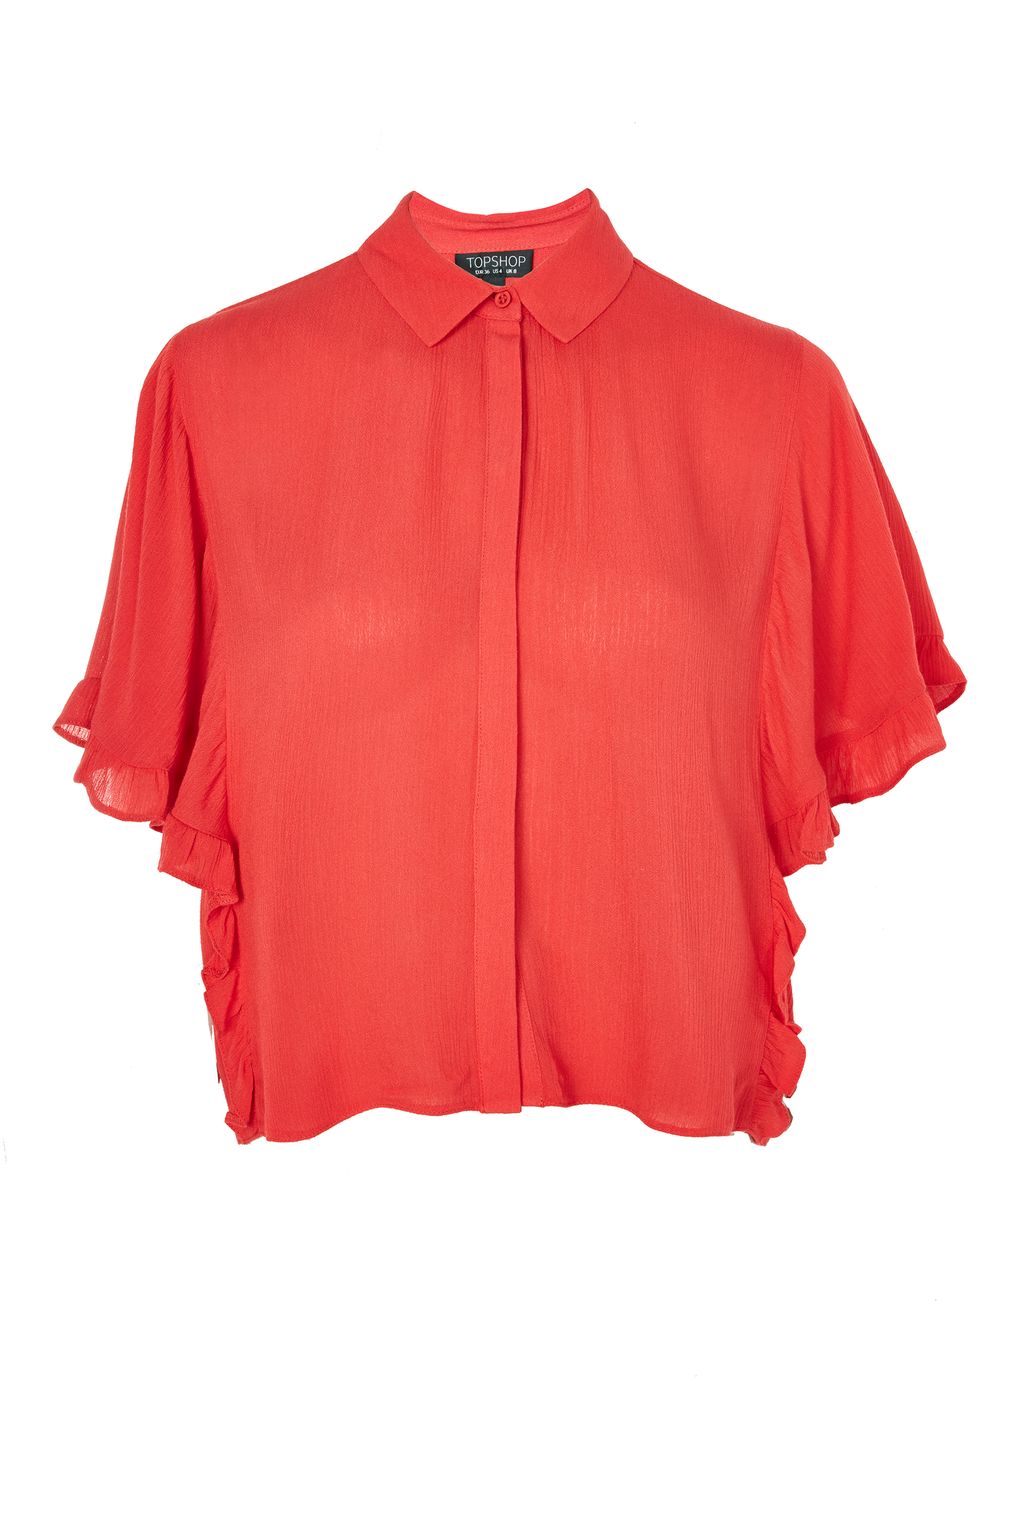 Frill sleeve Shirt, Topshop, €40